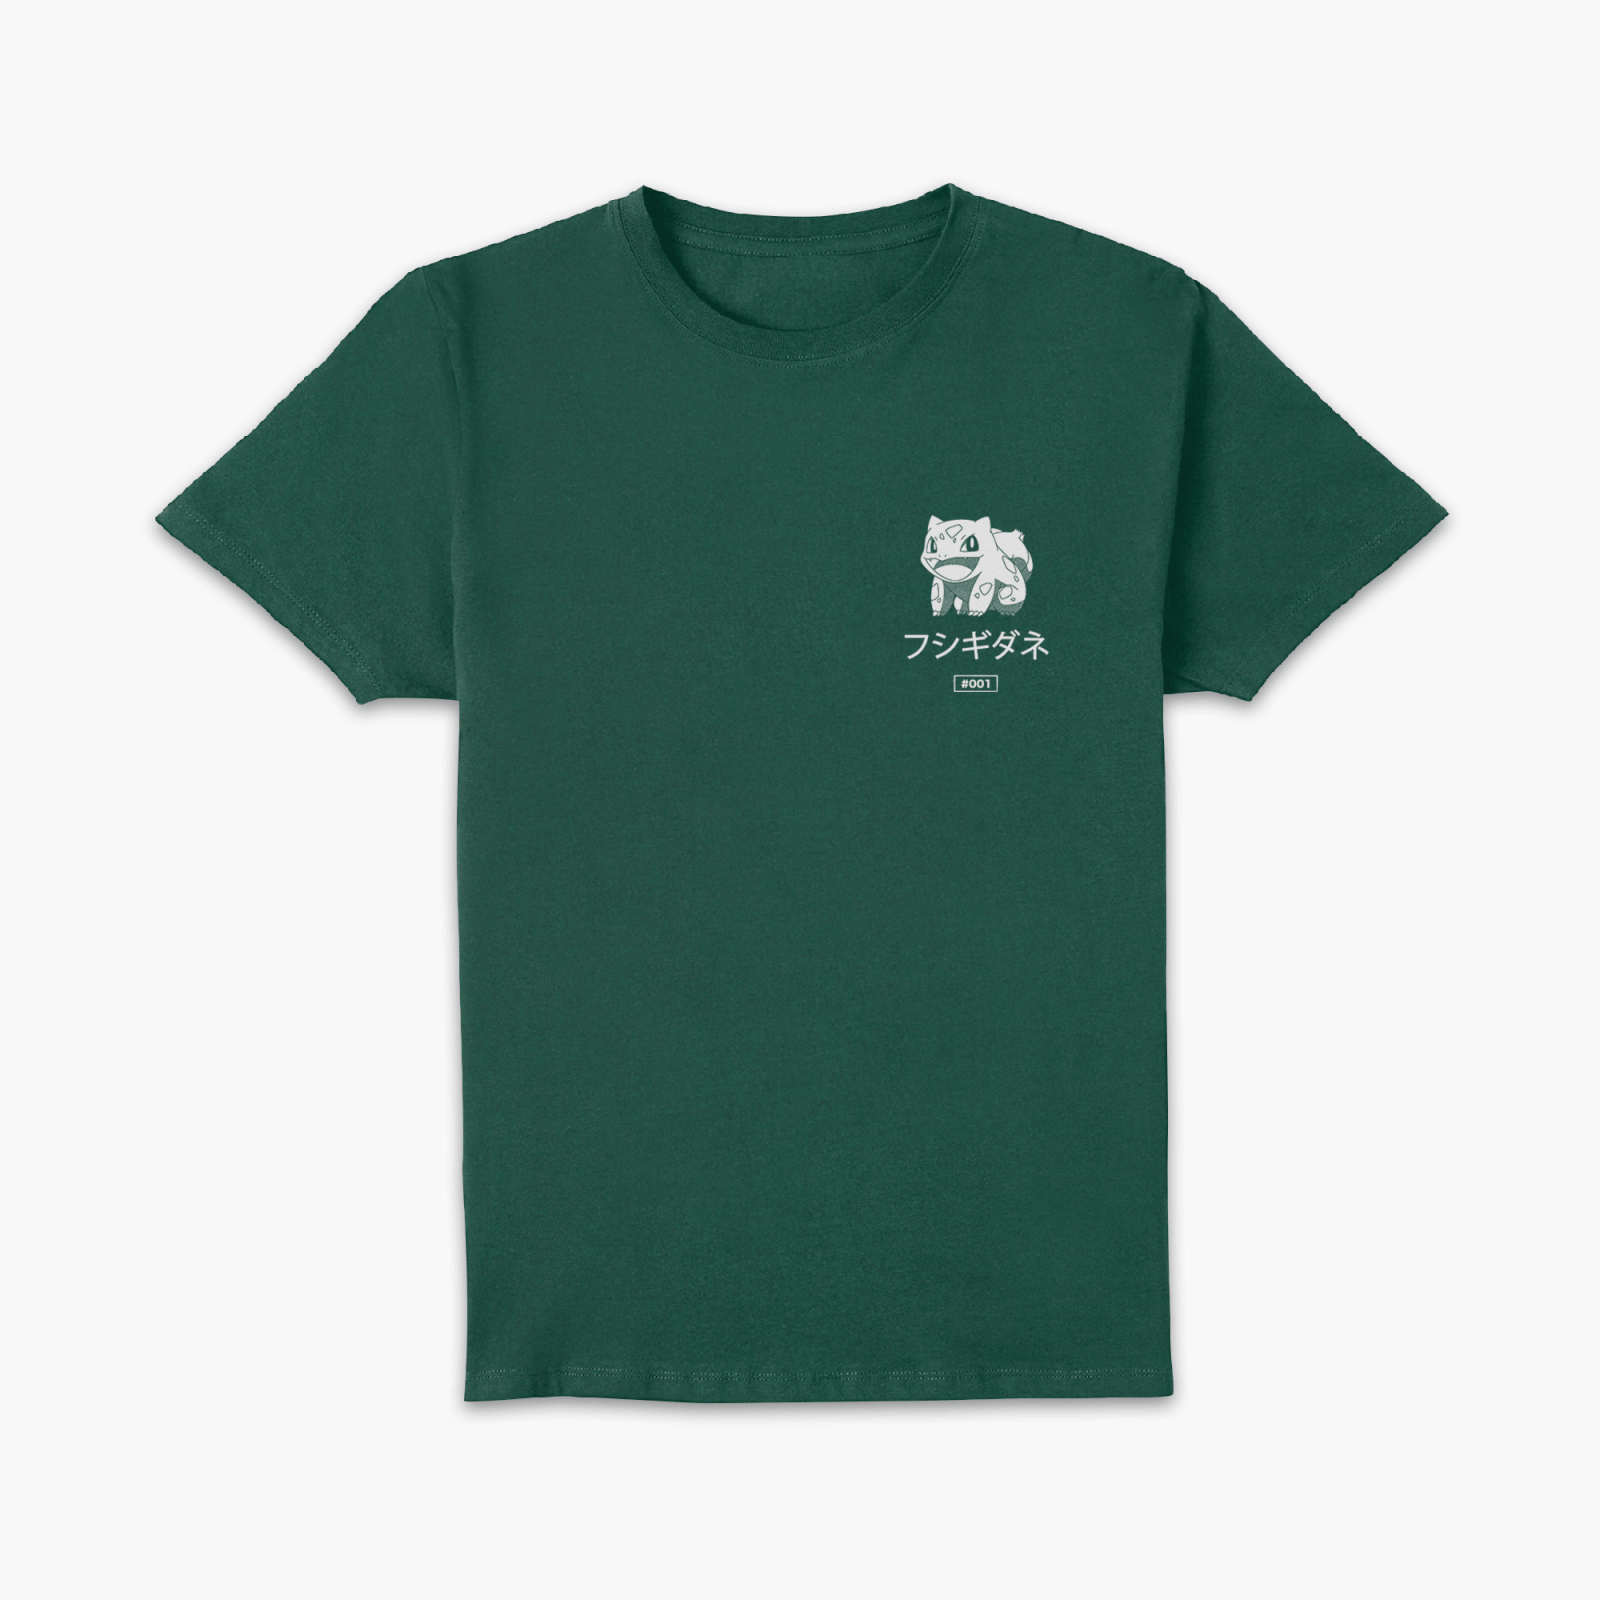 Pokémon Bulbasaur Evo Unisex T-Shirt - Green - L